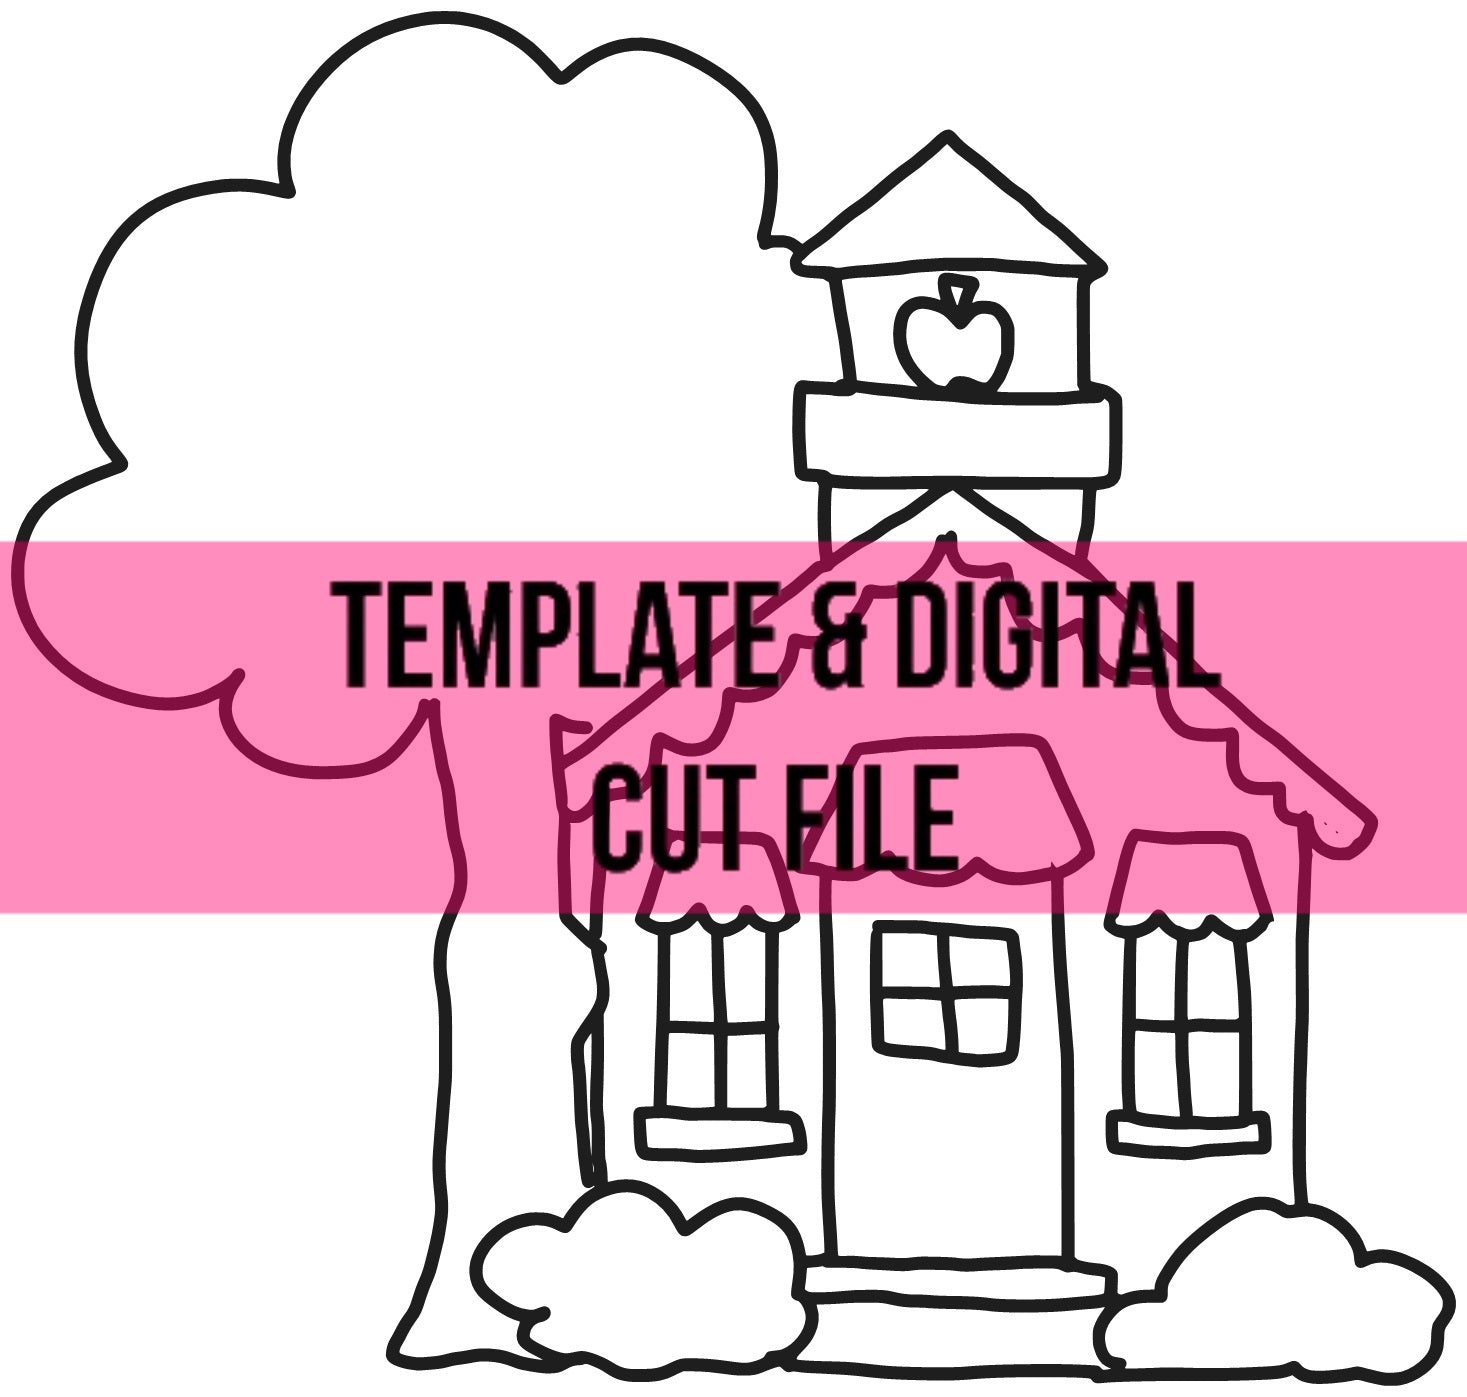 School House Template & Digital Cut File